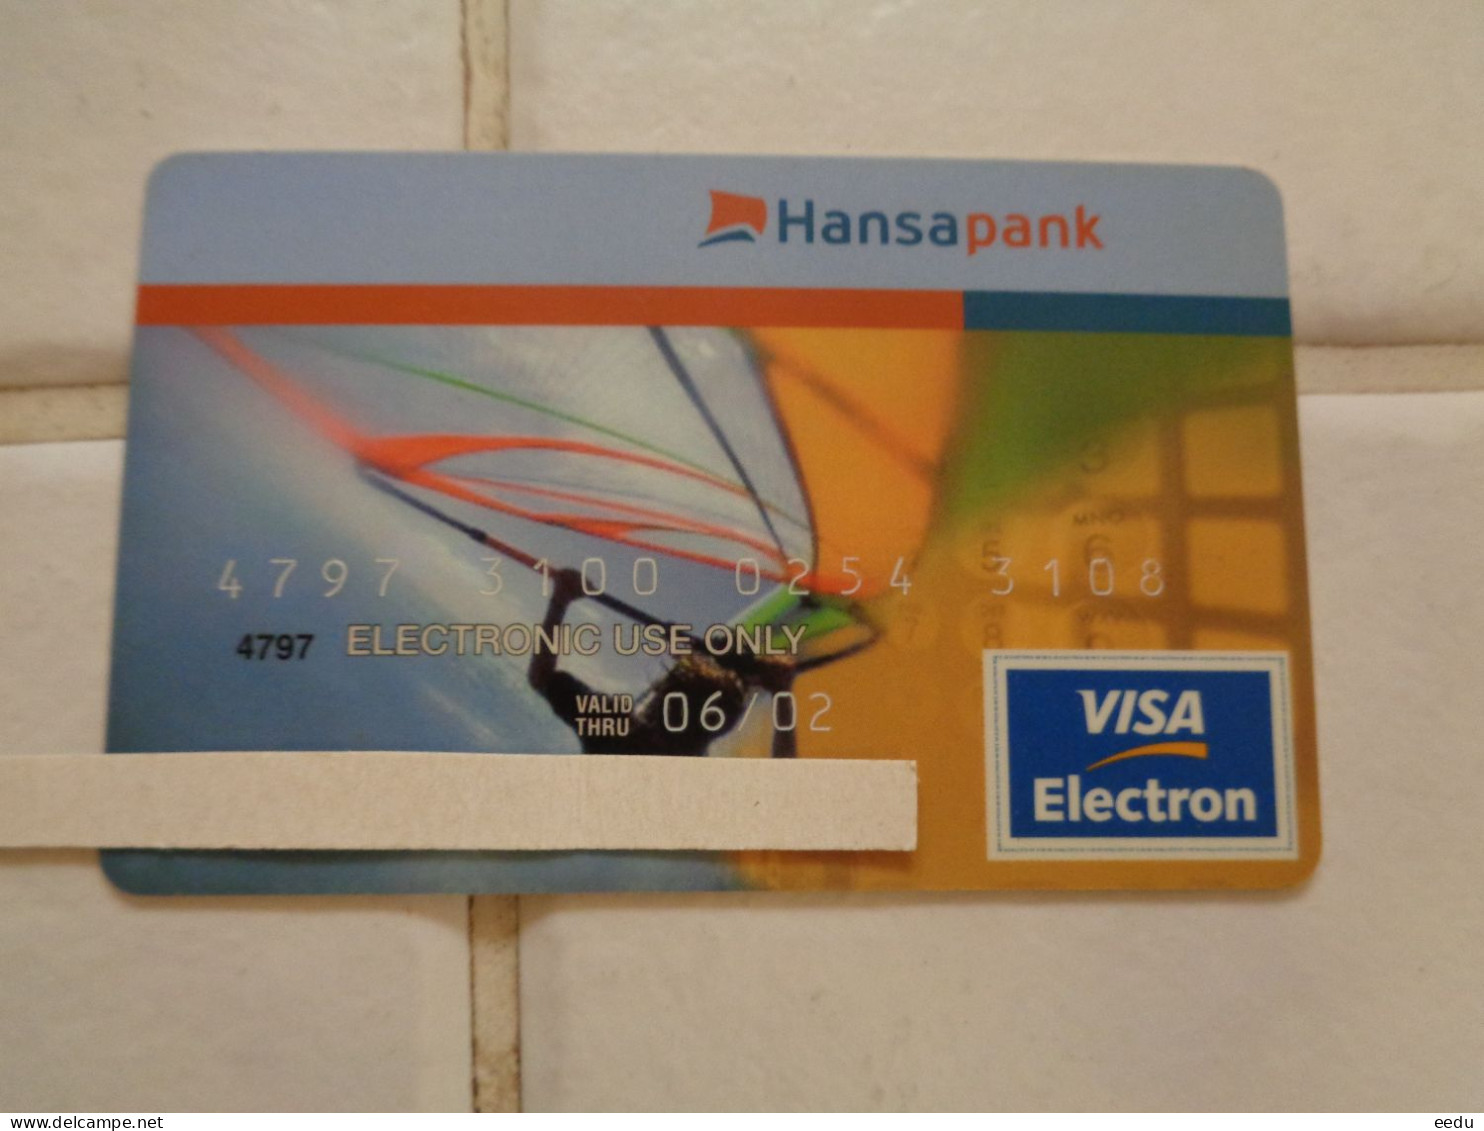 Estonia Bank Card - Credit Cards (Exp. Date Min. 10 Years)